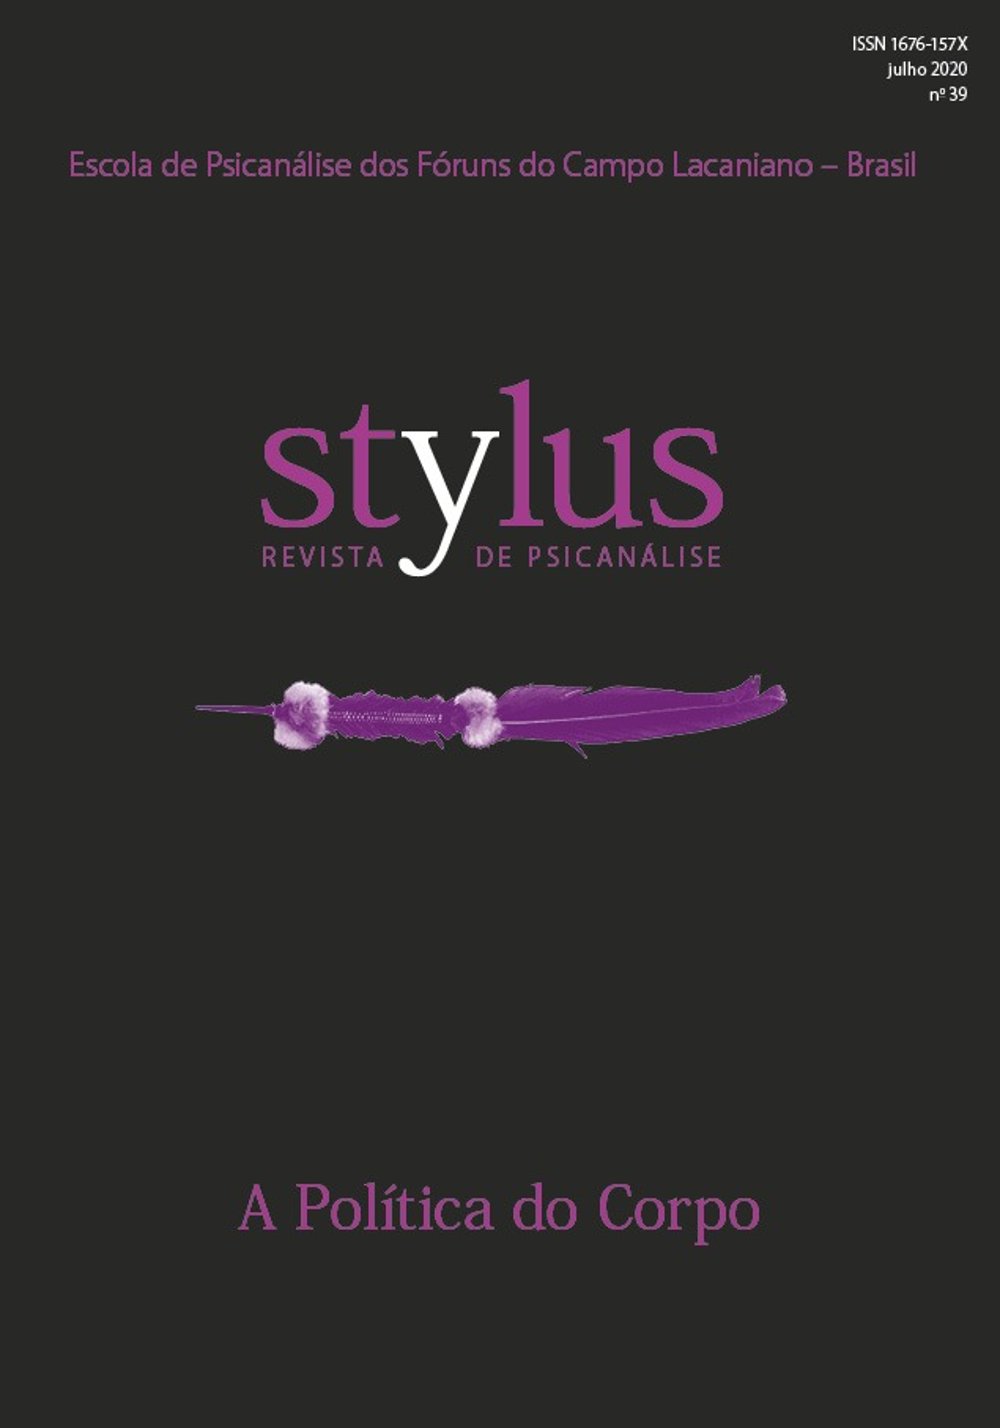 Stylus 32 by Escola de Psicanálise dos Fóruns do Campo Lacaniano